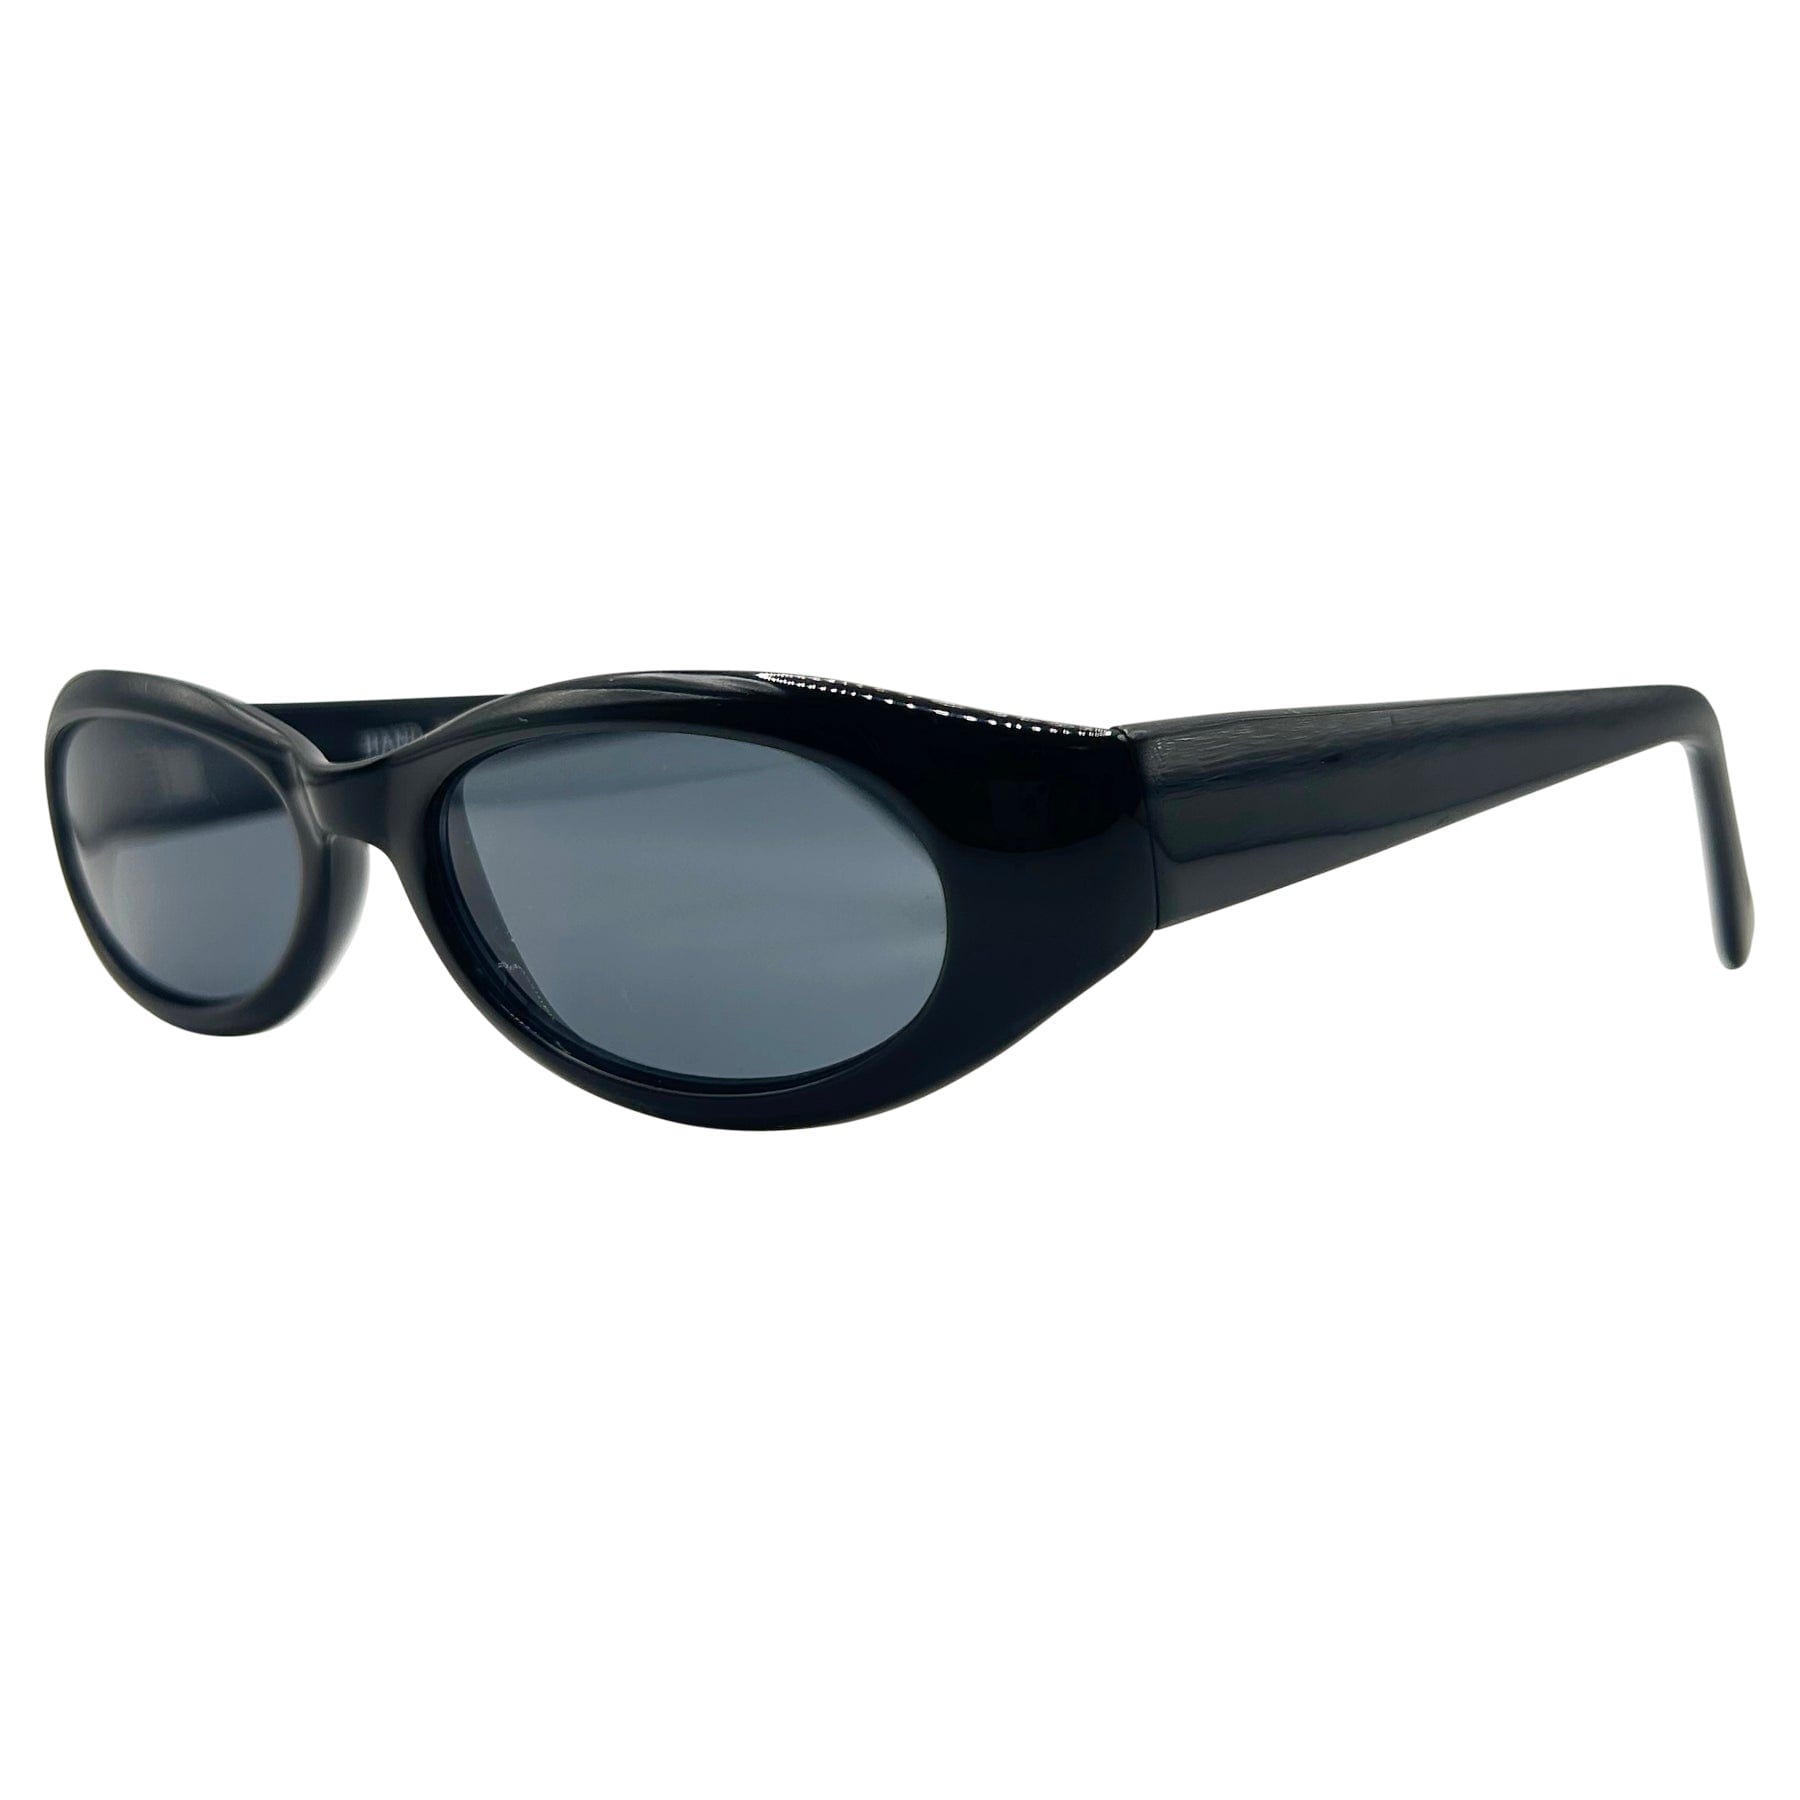 90s small black round sunglasses with a super dark lens